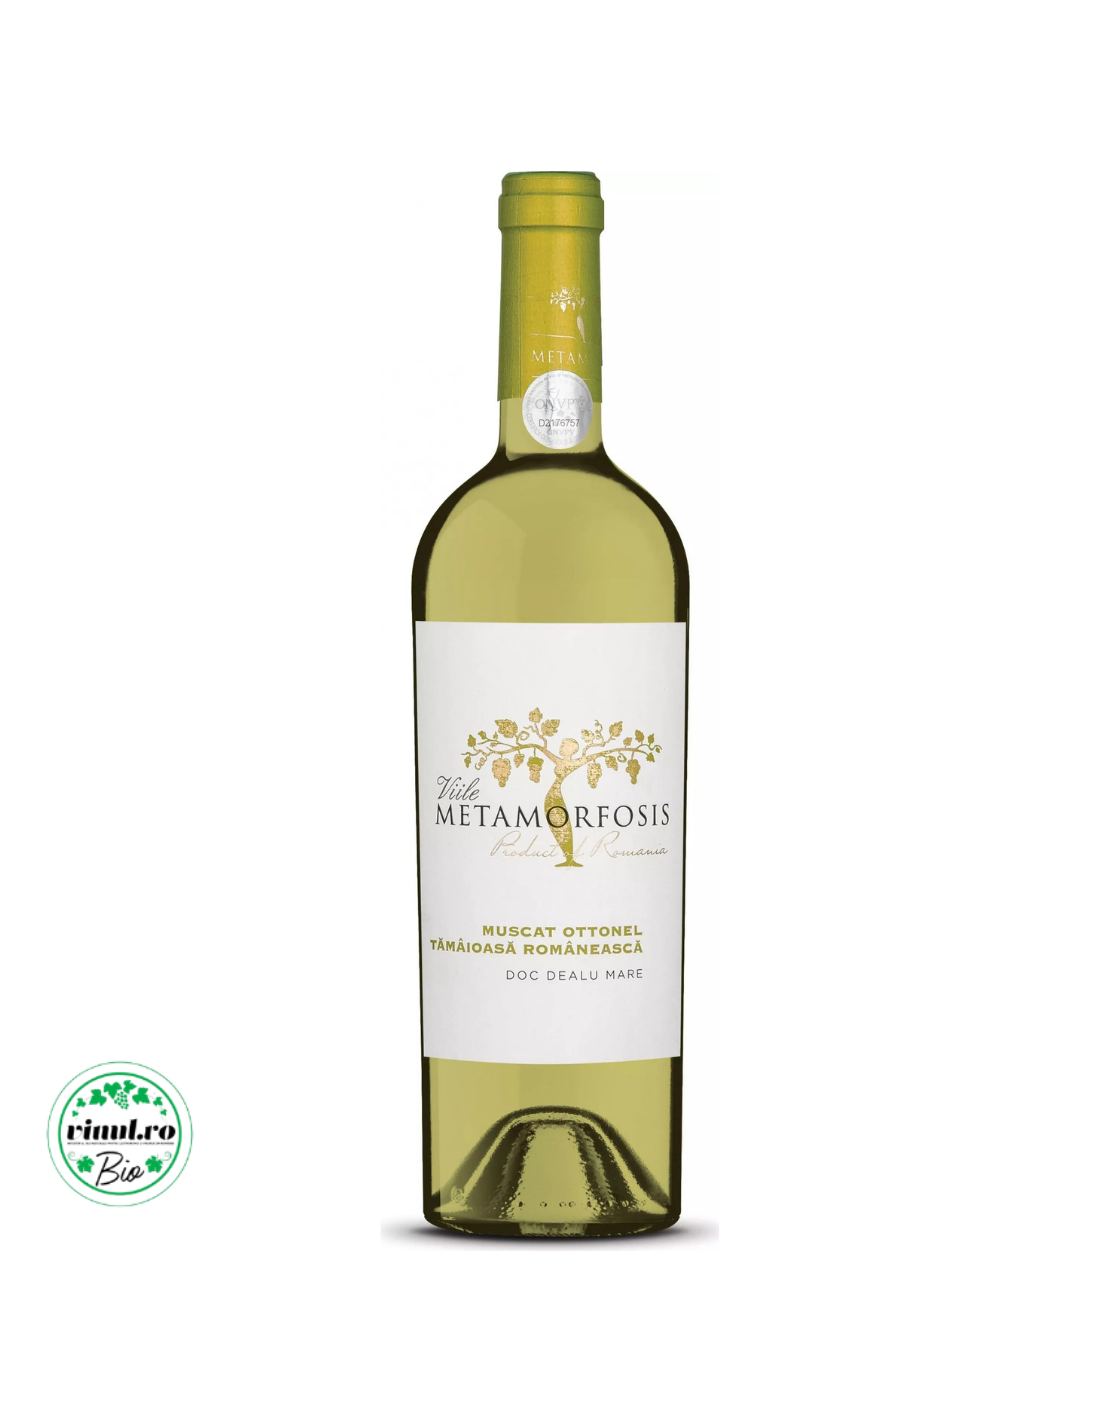 Vin alb sec Viile Metamorfosis DOC, 0.75L, 13.5% alc., Romania alcooldiscount.ro